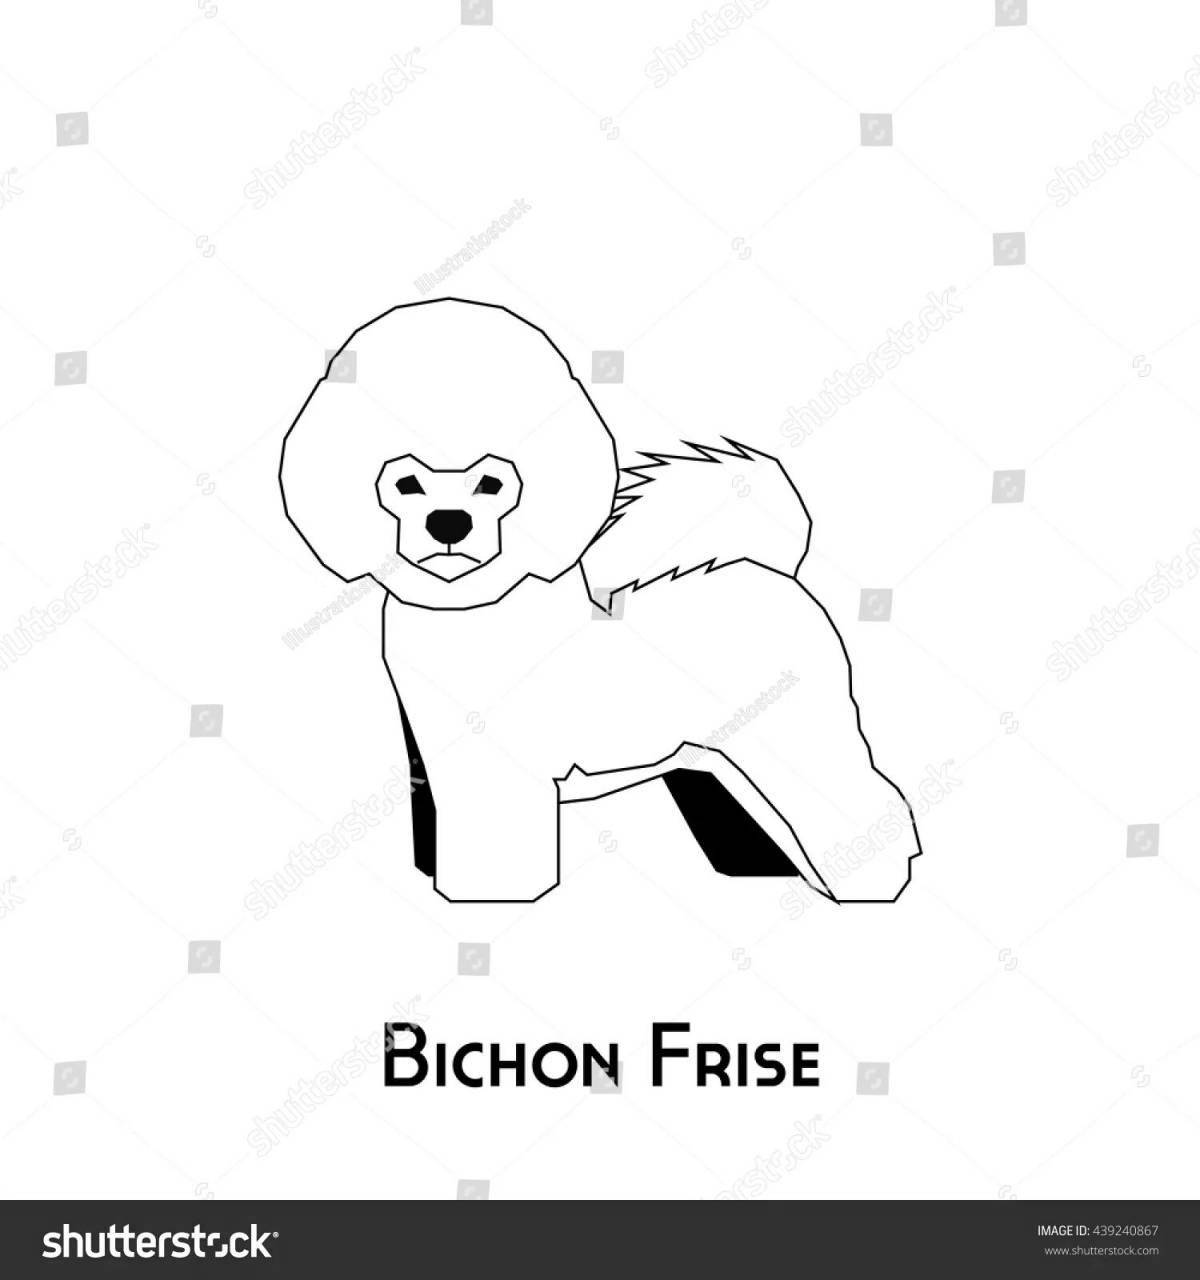 Amazing bichon frize coloring page